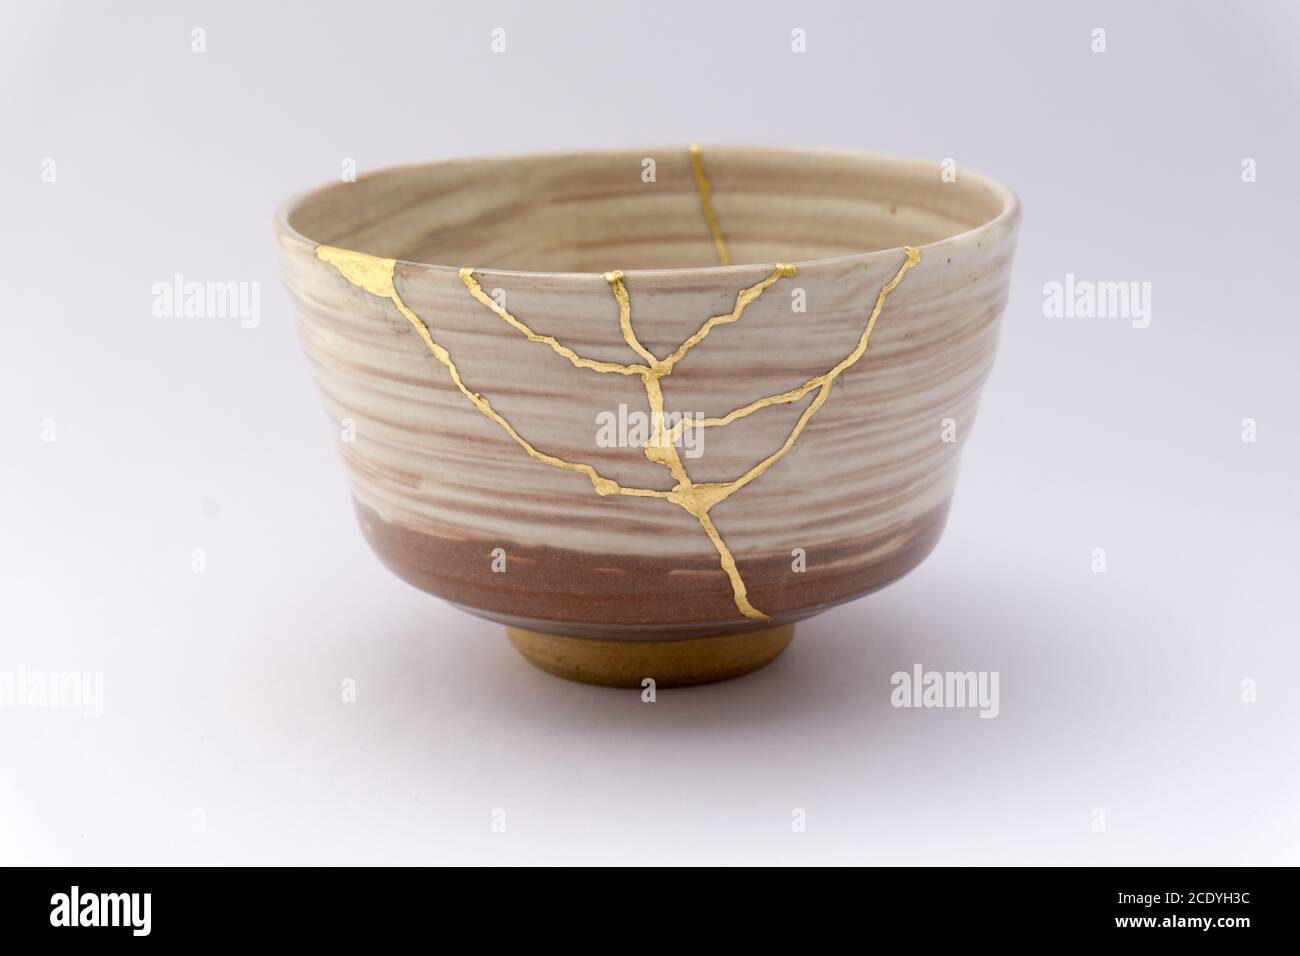 auf Keramik beige Goldene alten Kintsugi reparieren Alamy - japanischen Risse Chawan. Stockfotografie